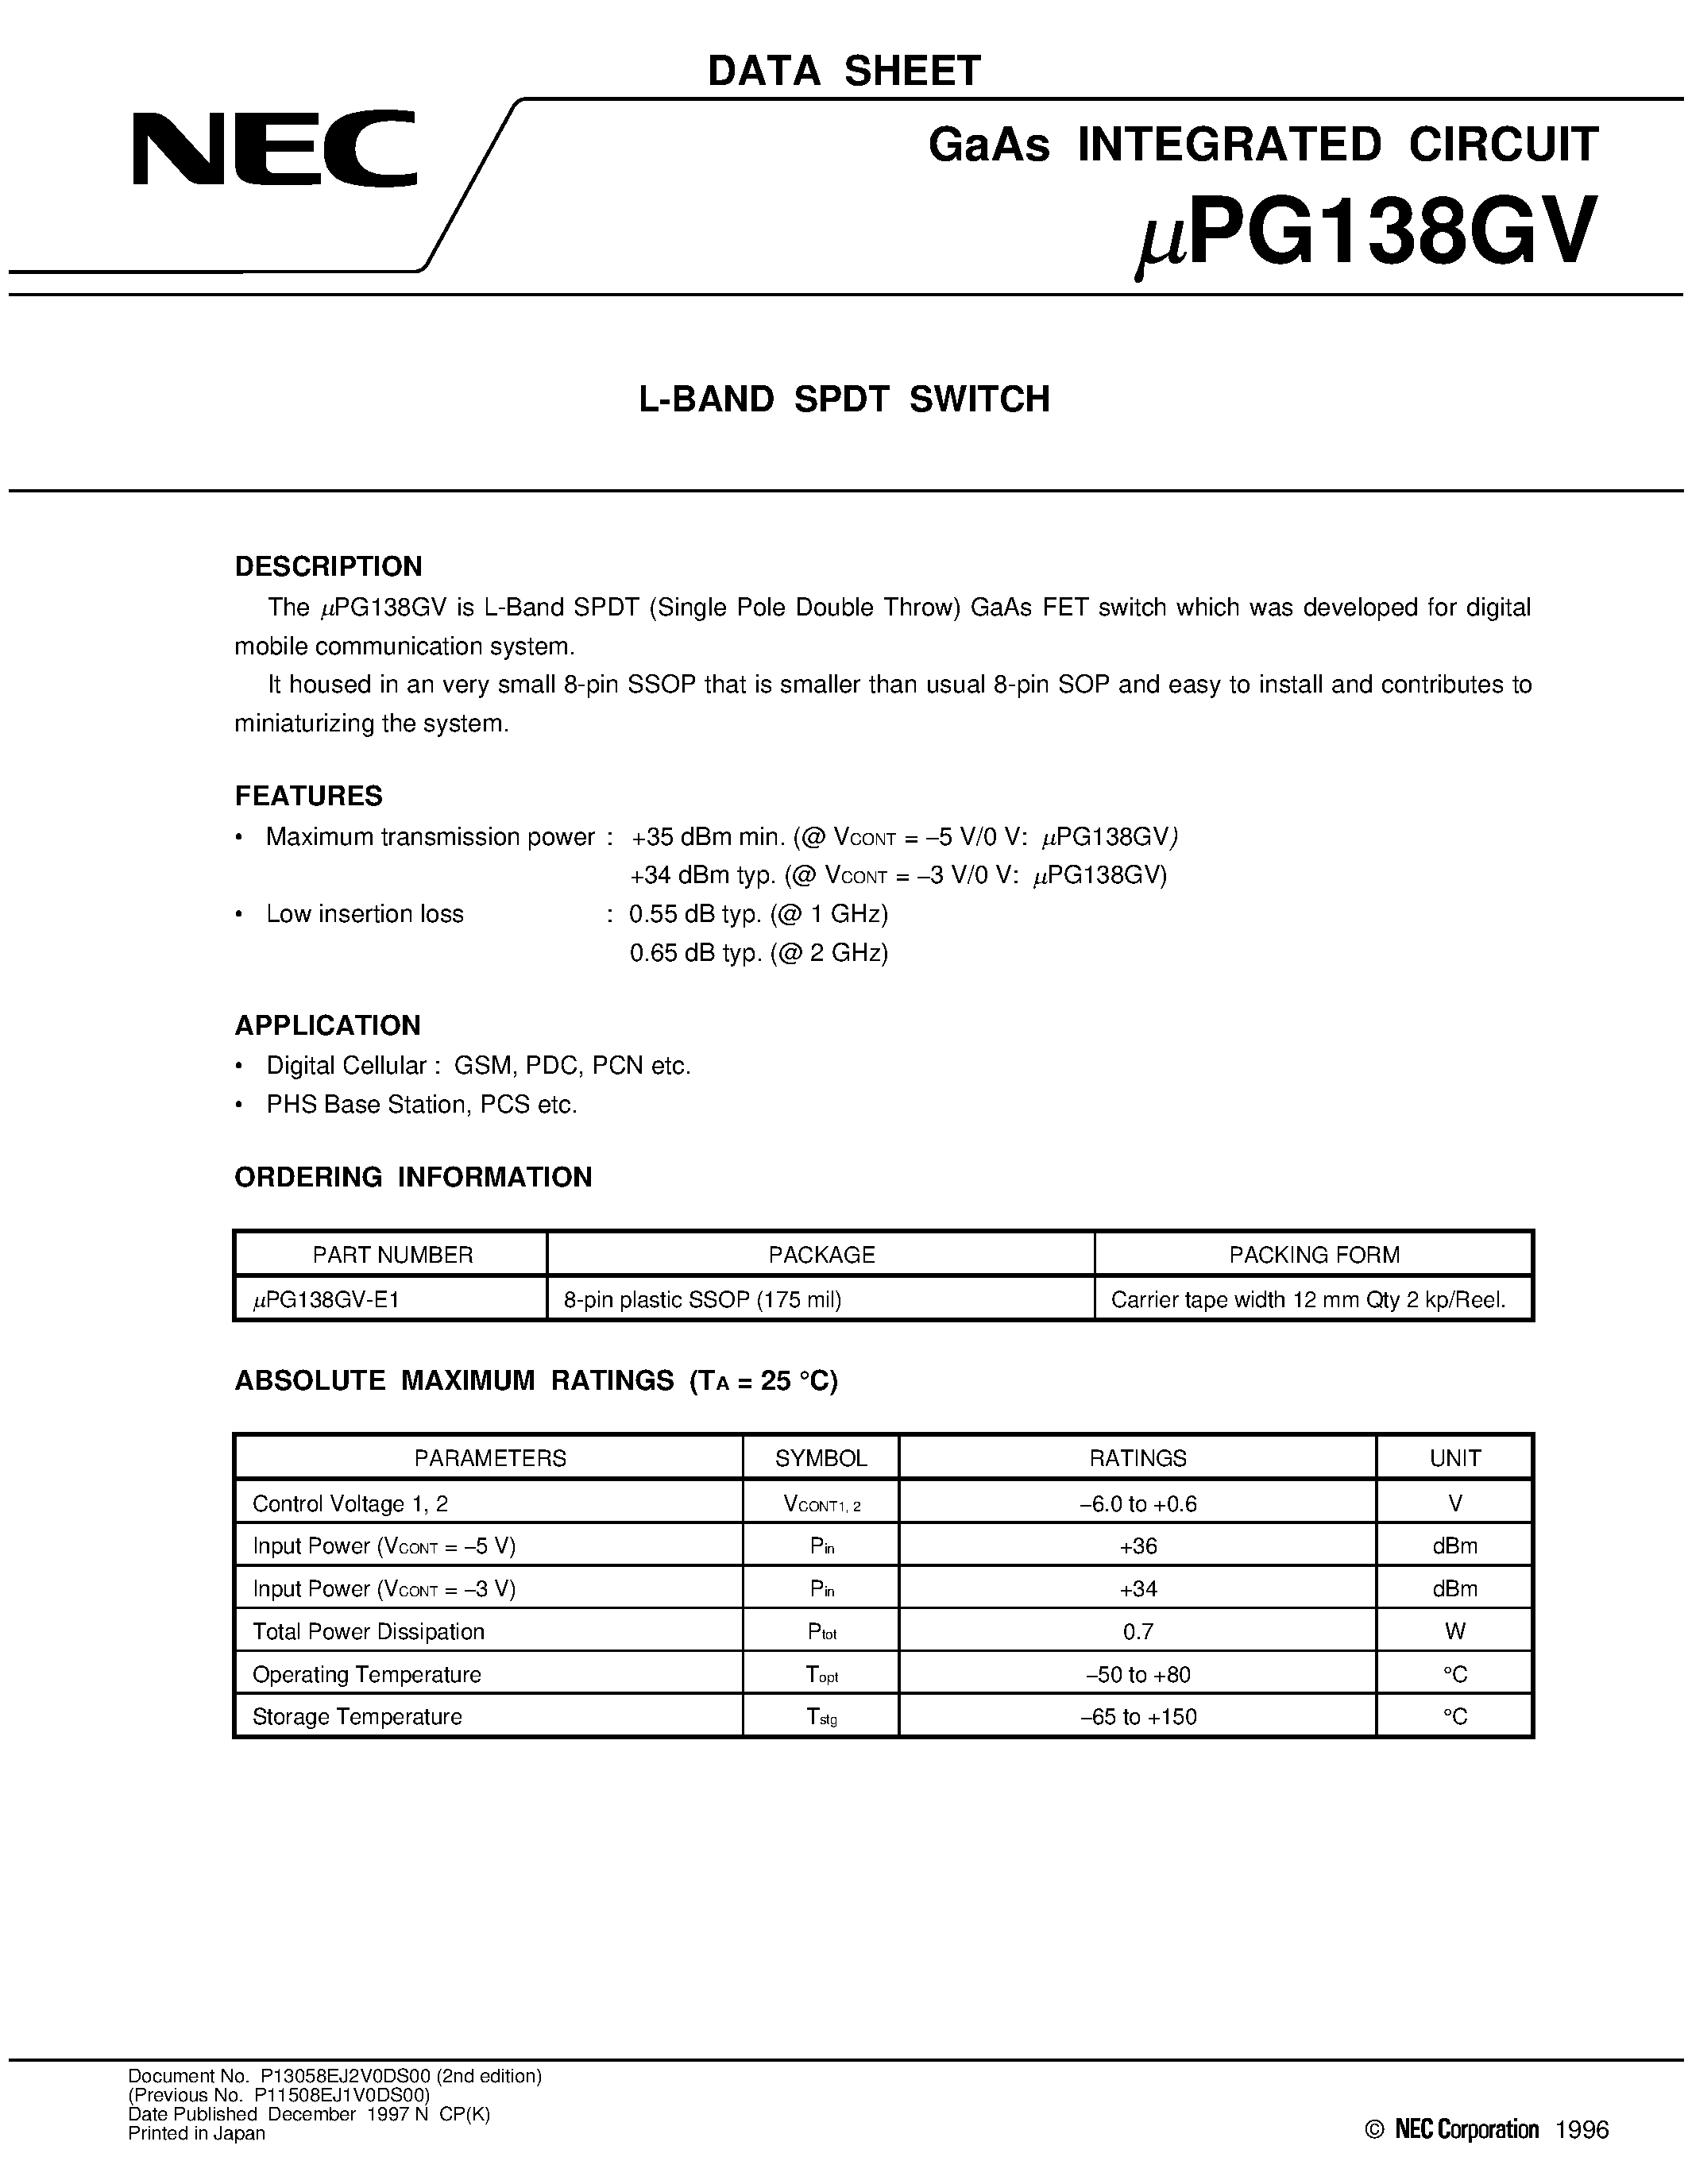 Datasheet UPG138GV-E1 - L-BAND SPDT SWITCH page 1